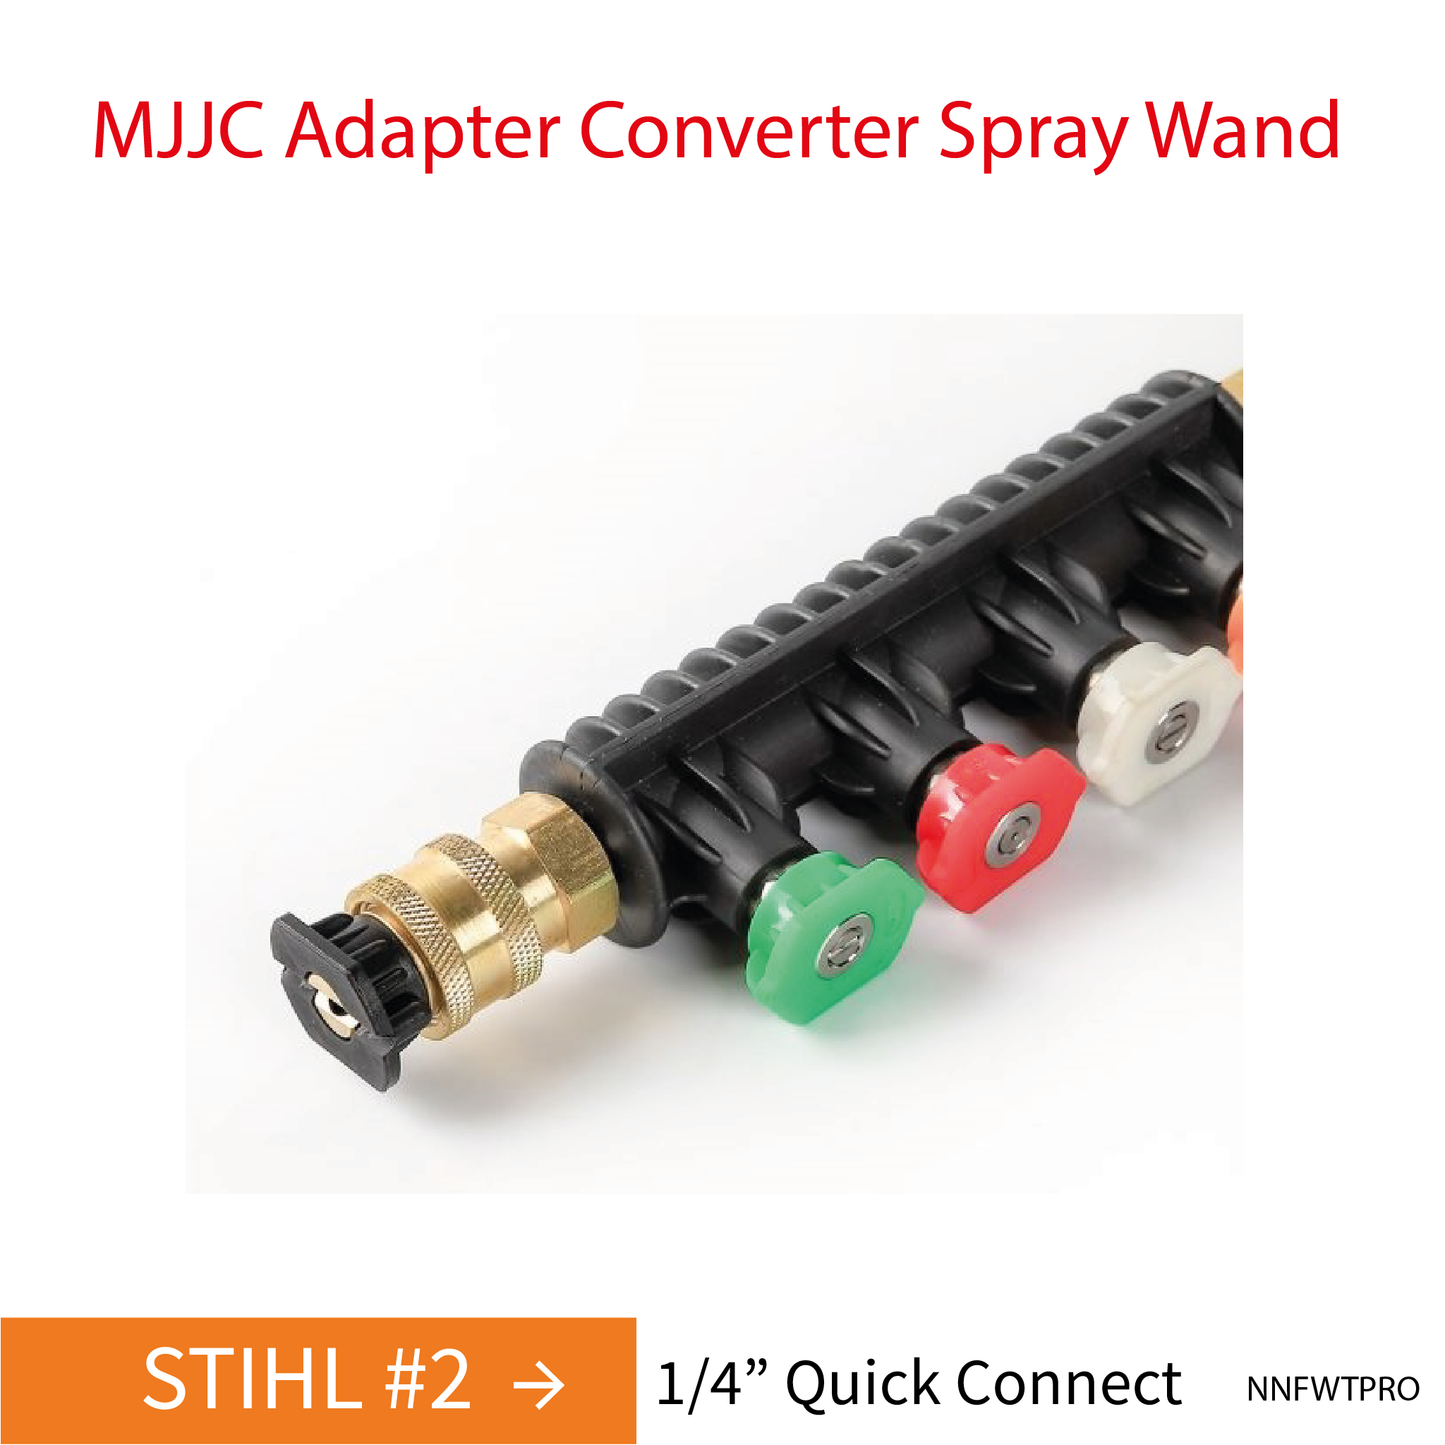 STIHL MJJC Adapter Conversion Converter pressure washer Spray Wand with 5 spray tips